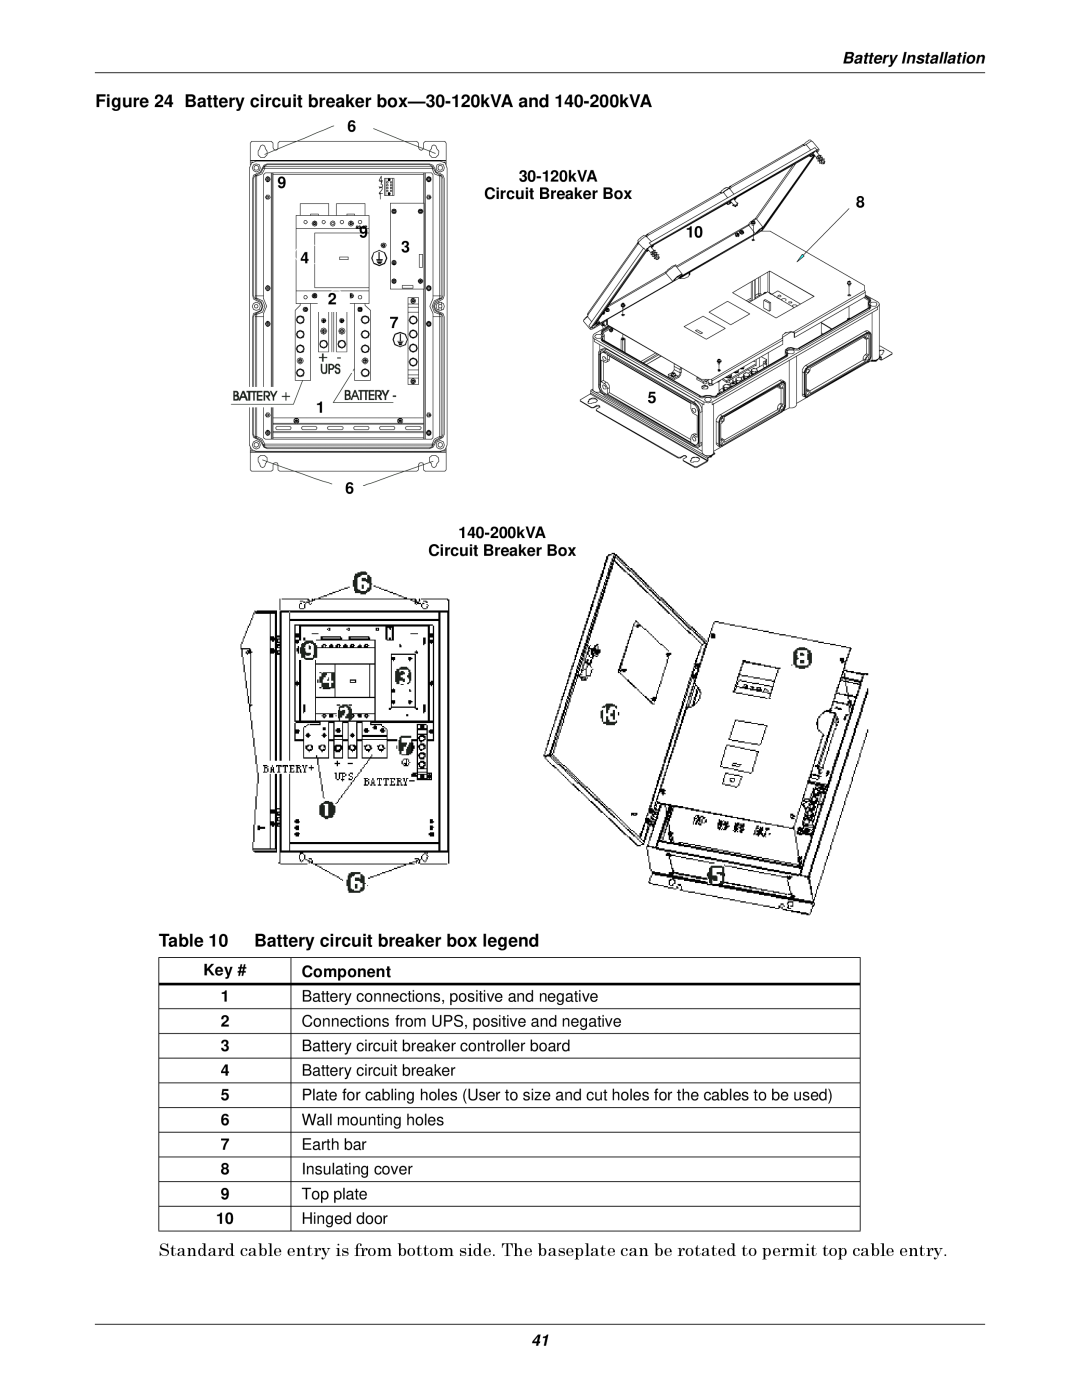 Emerson 30-200kVA, 400V Battery circuit breaker box-30-120kVA and 140-200kVA, Battery circuit breaker box legend, Key # 